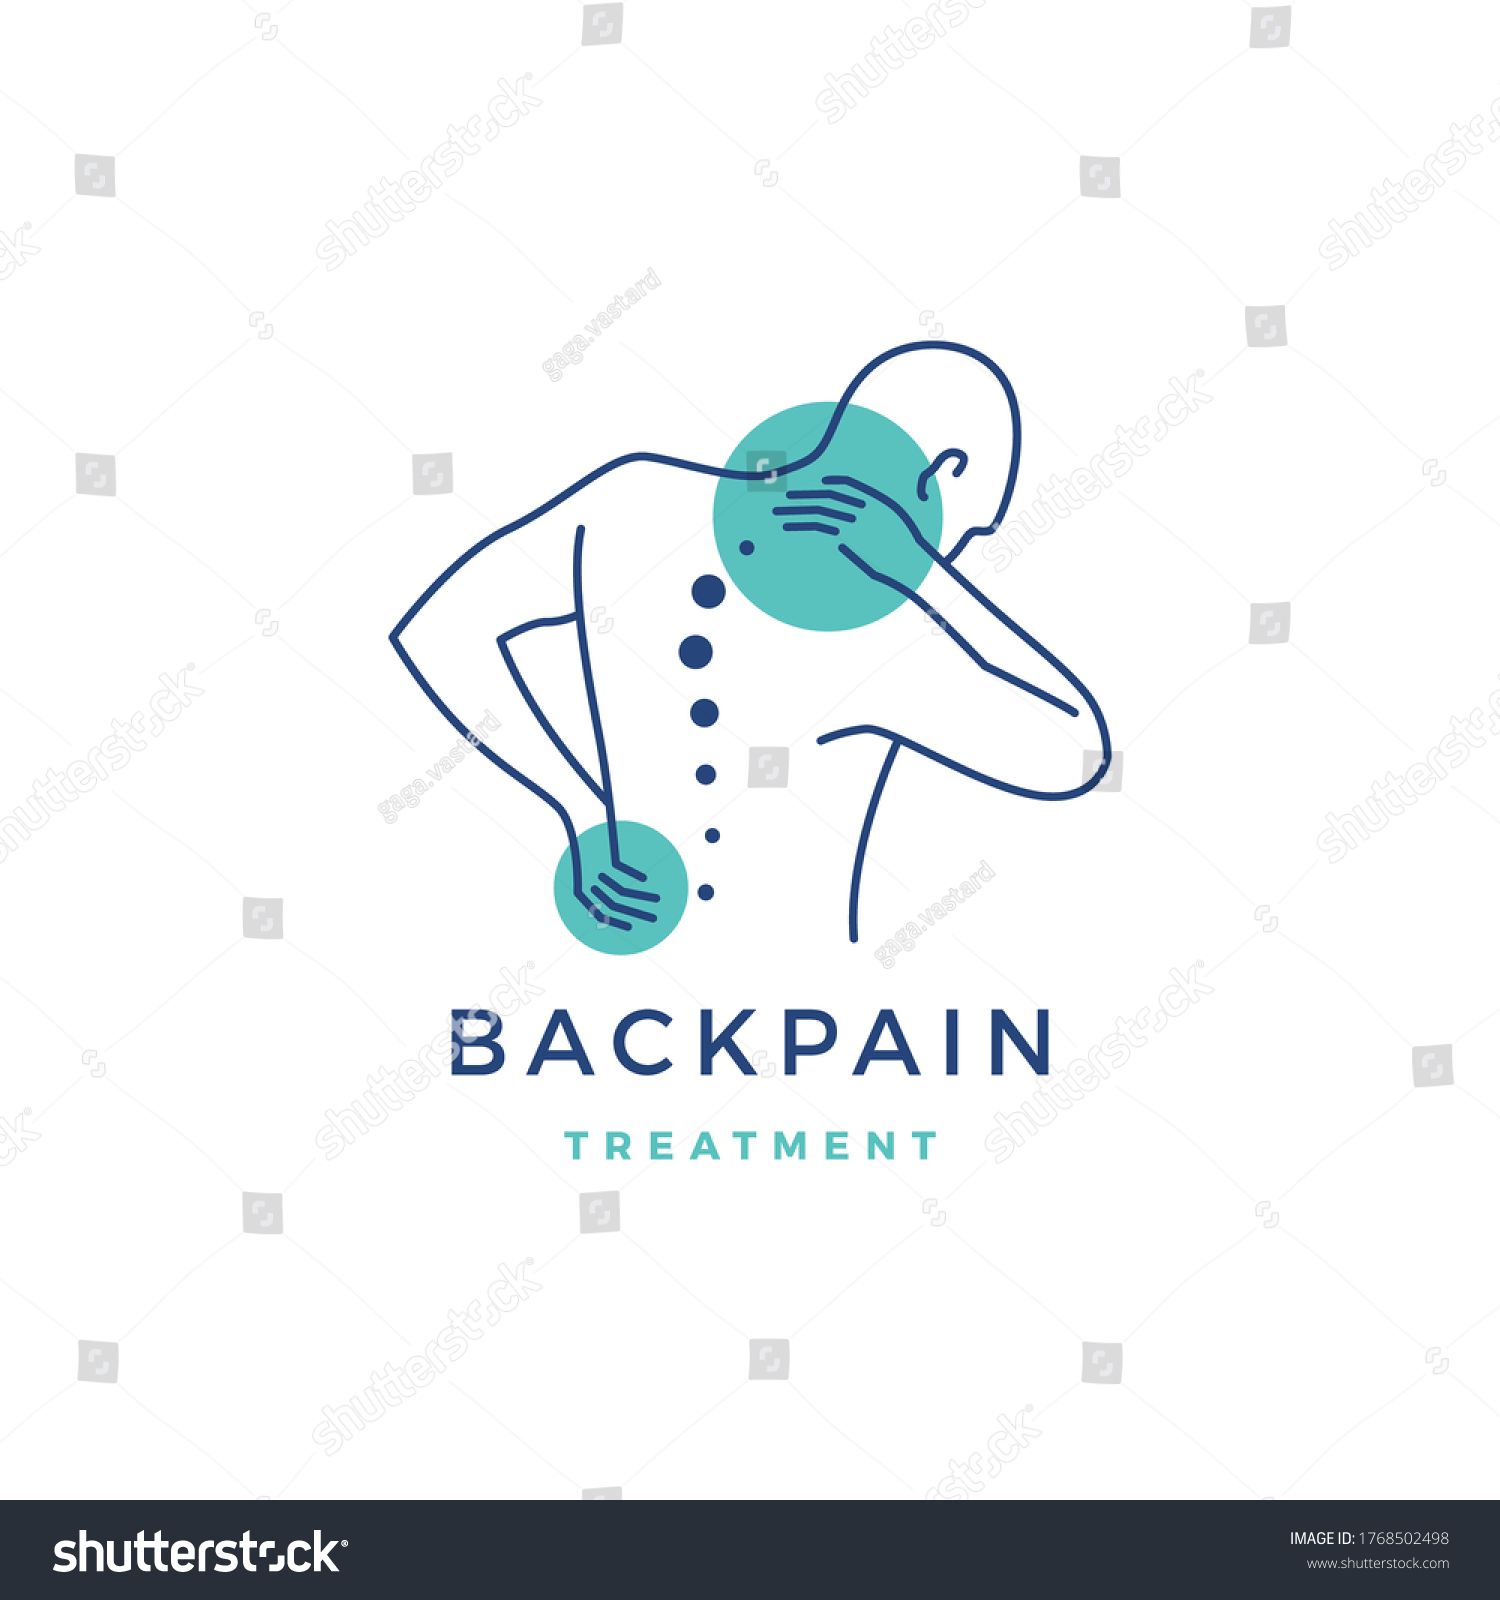 back pain treatment logo vector icon illustration #1768502498